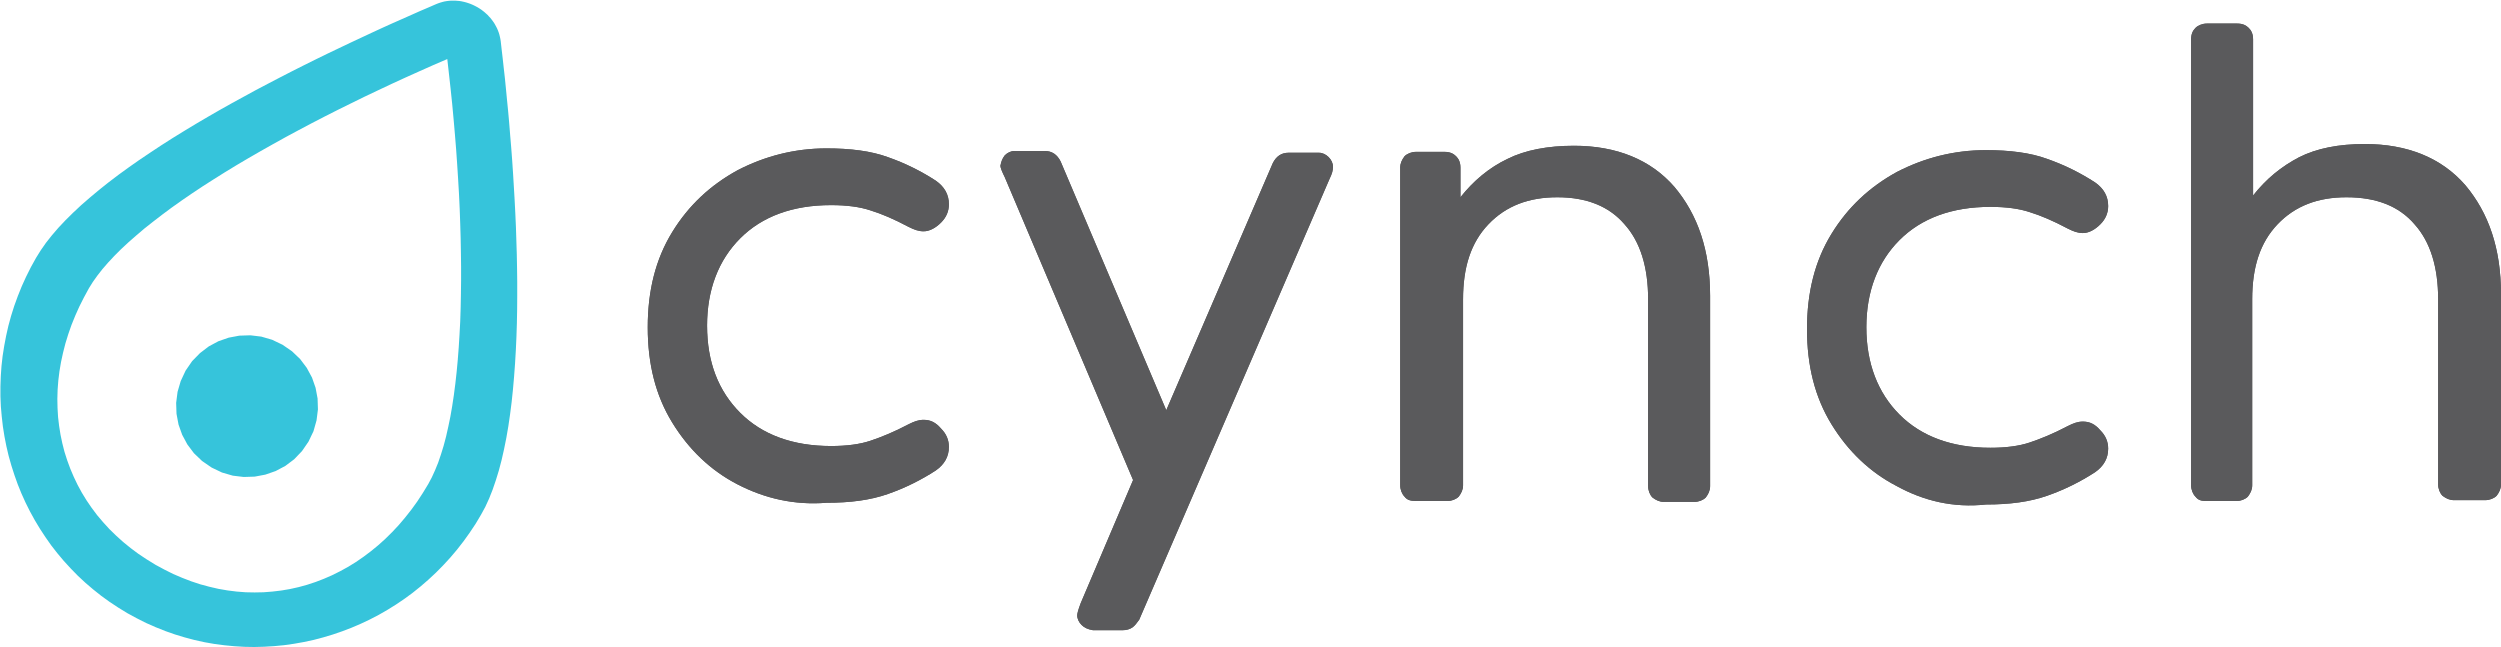 Cynch_Logo_-_Full.png